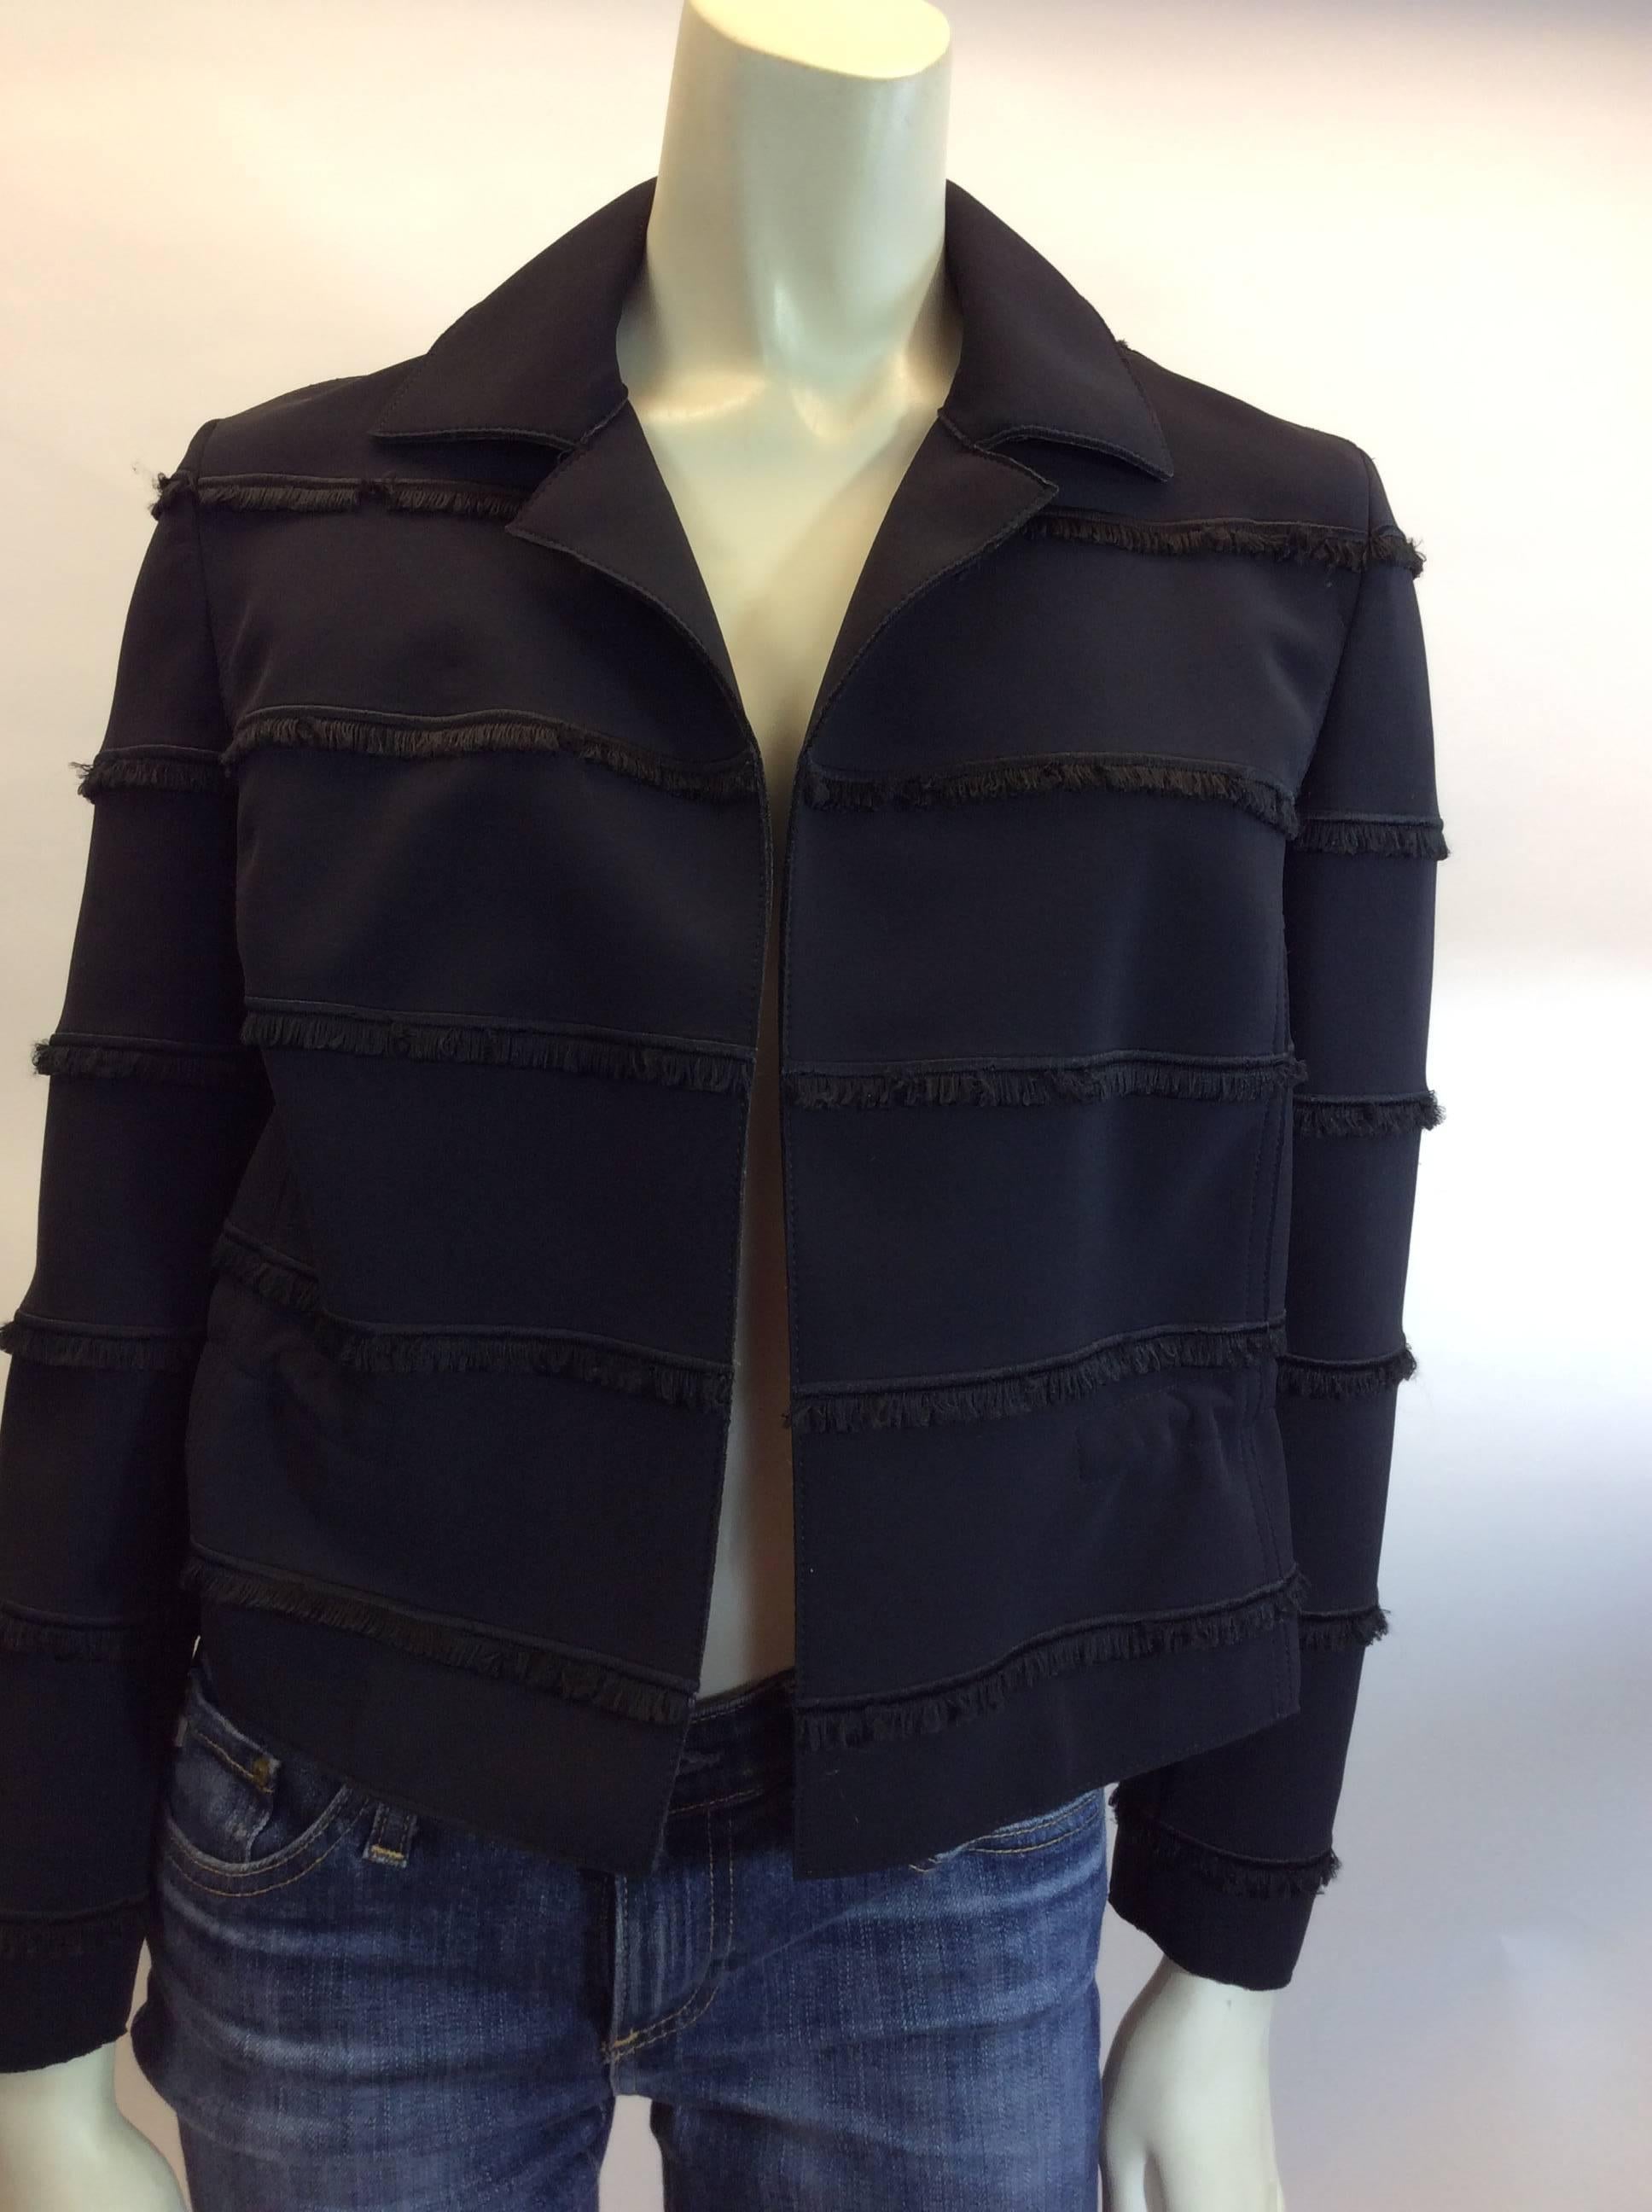 Akris Black Fringe Jacket
Size 4
$178
Fringe trim
Exterior - Polyester, Nylon & Elastane
Interior Lining - Polyester & Elastane
Made in Romania
